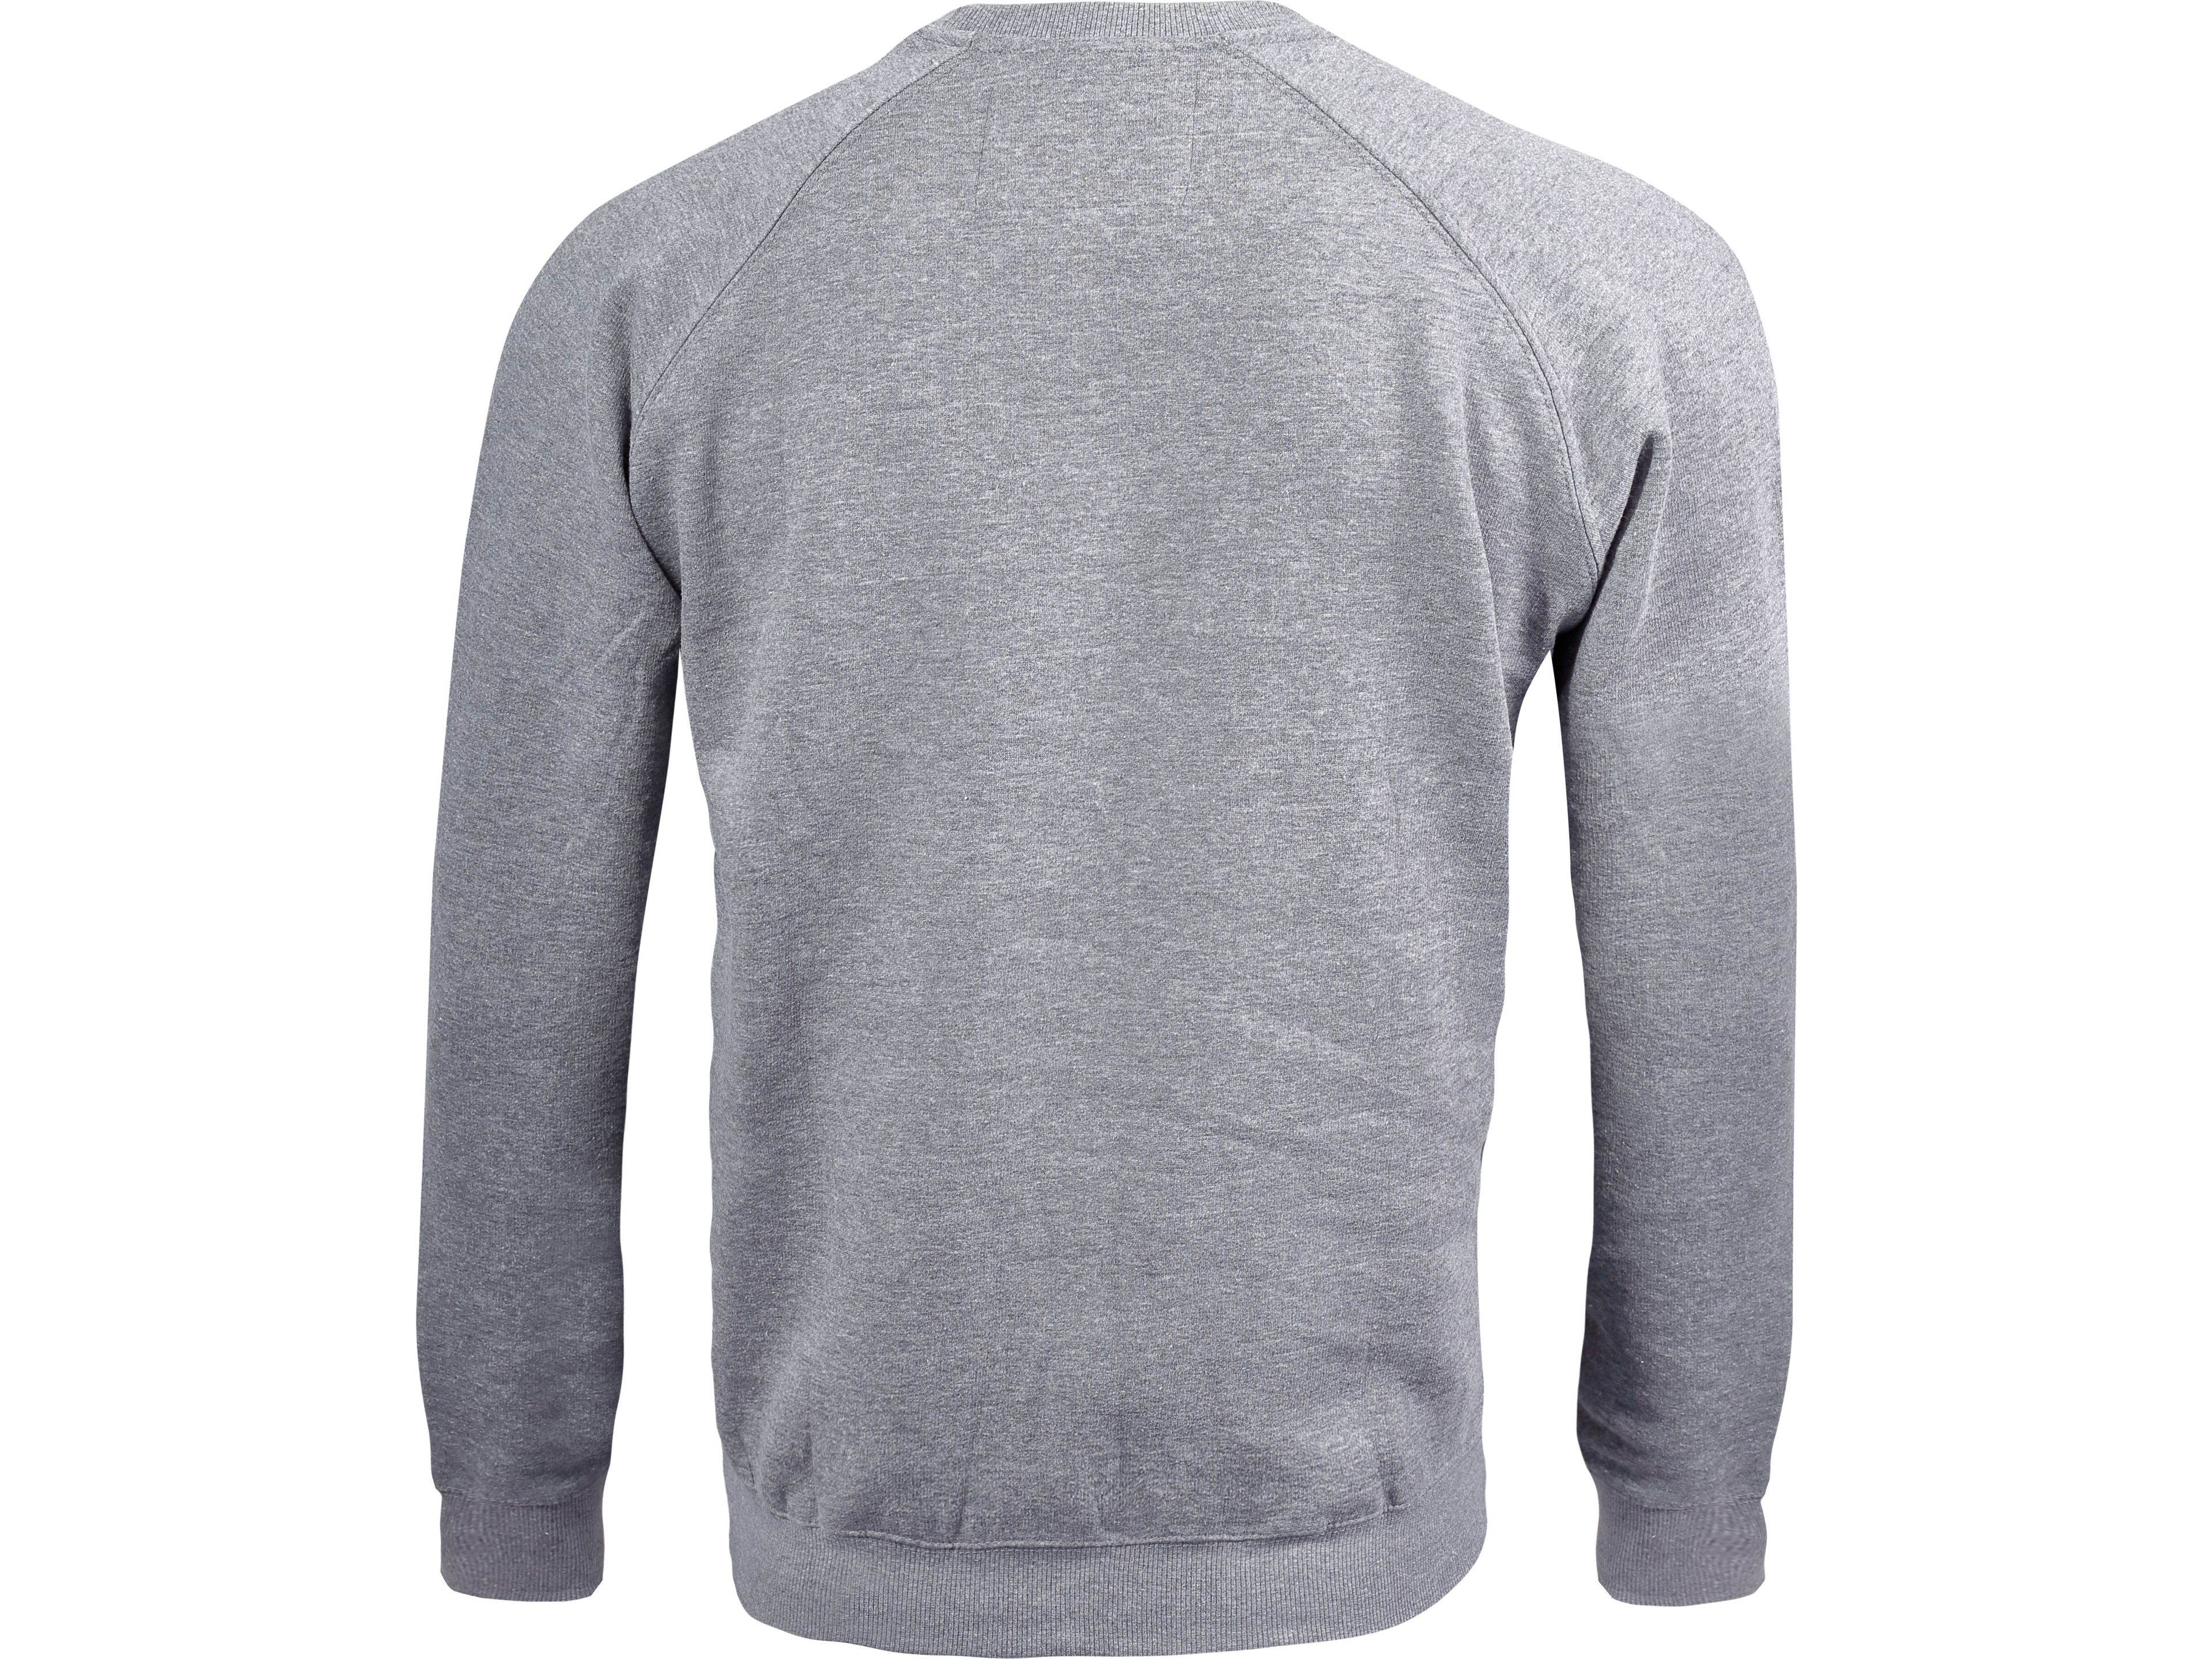 lahti-pro-sweater-l40117